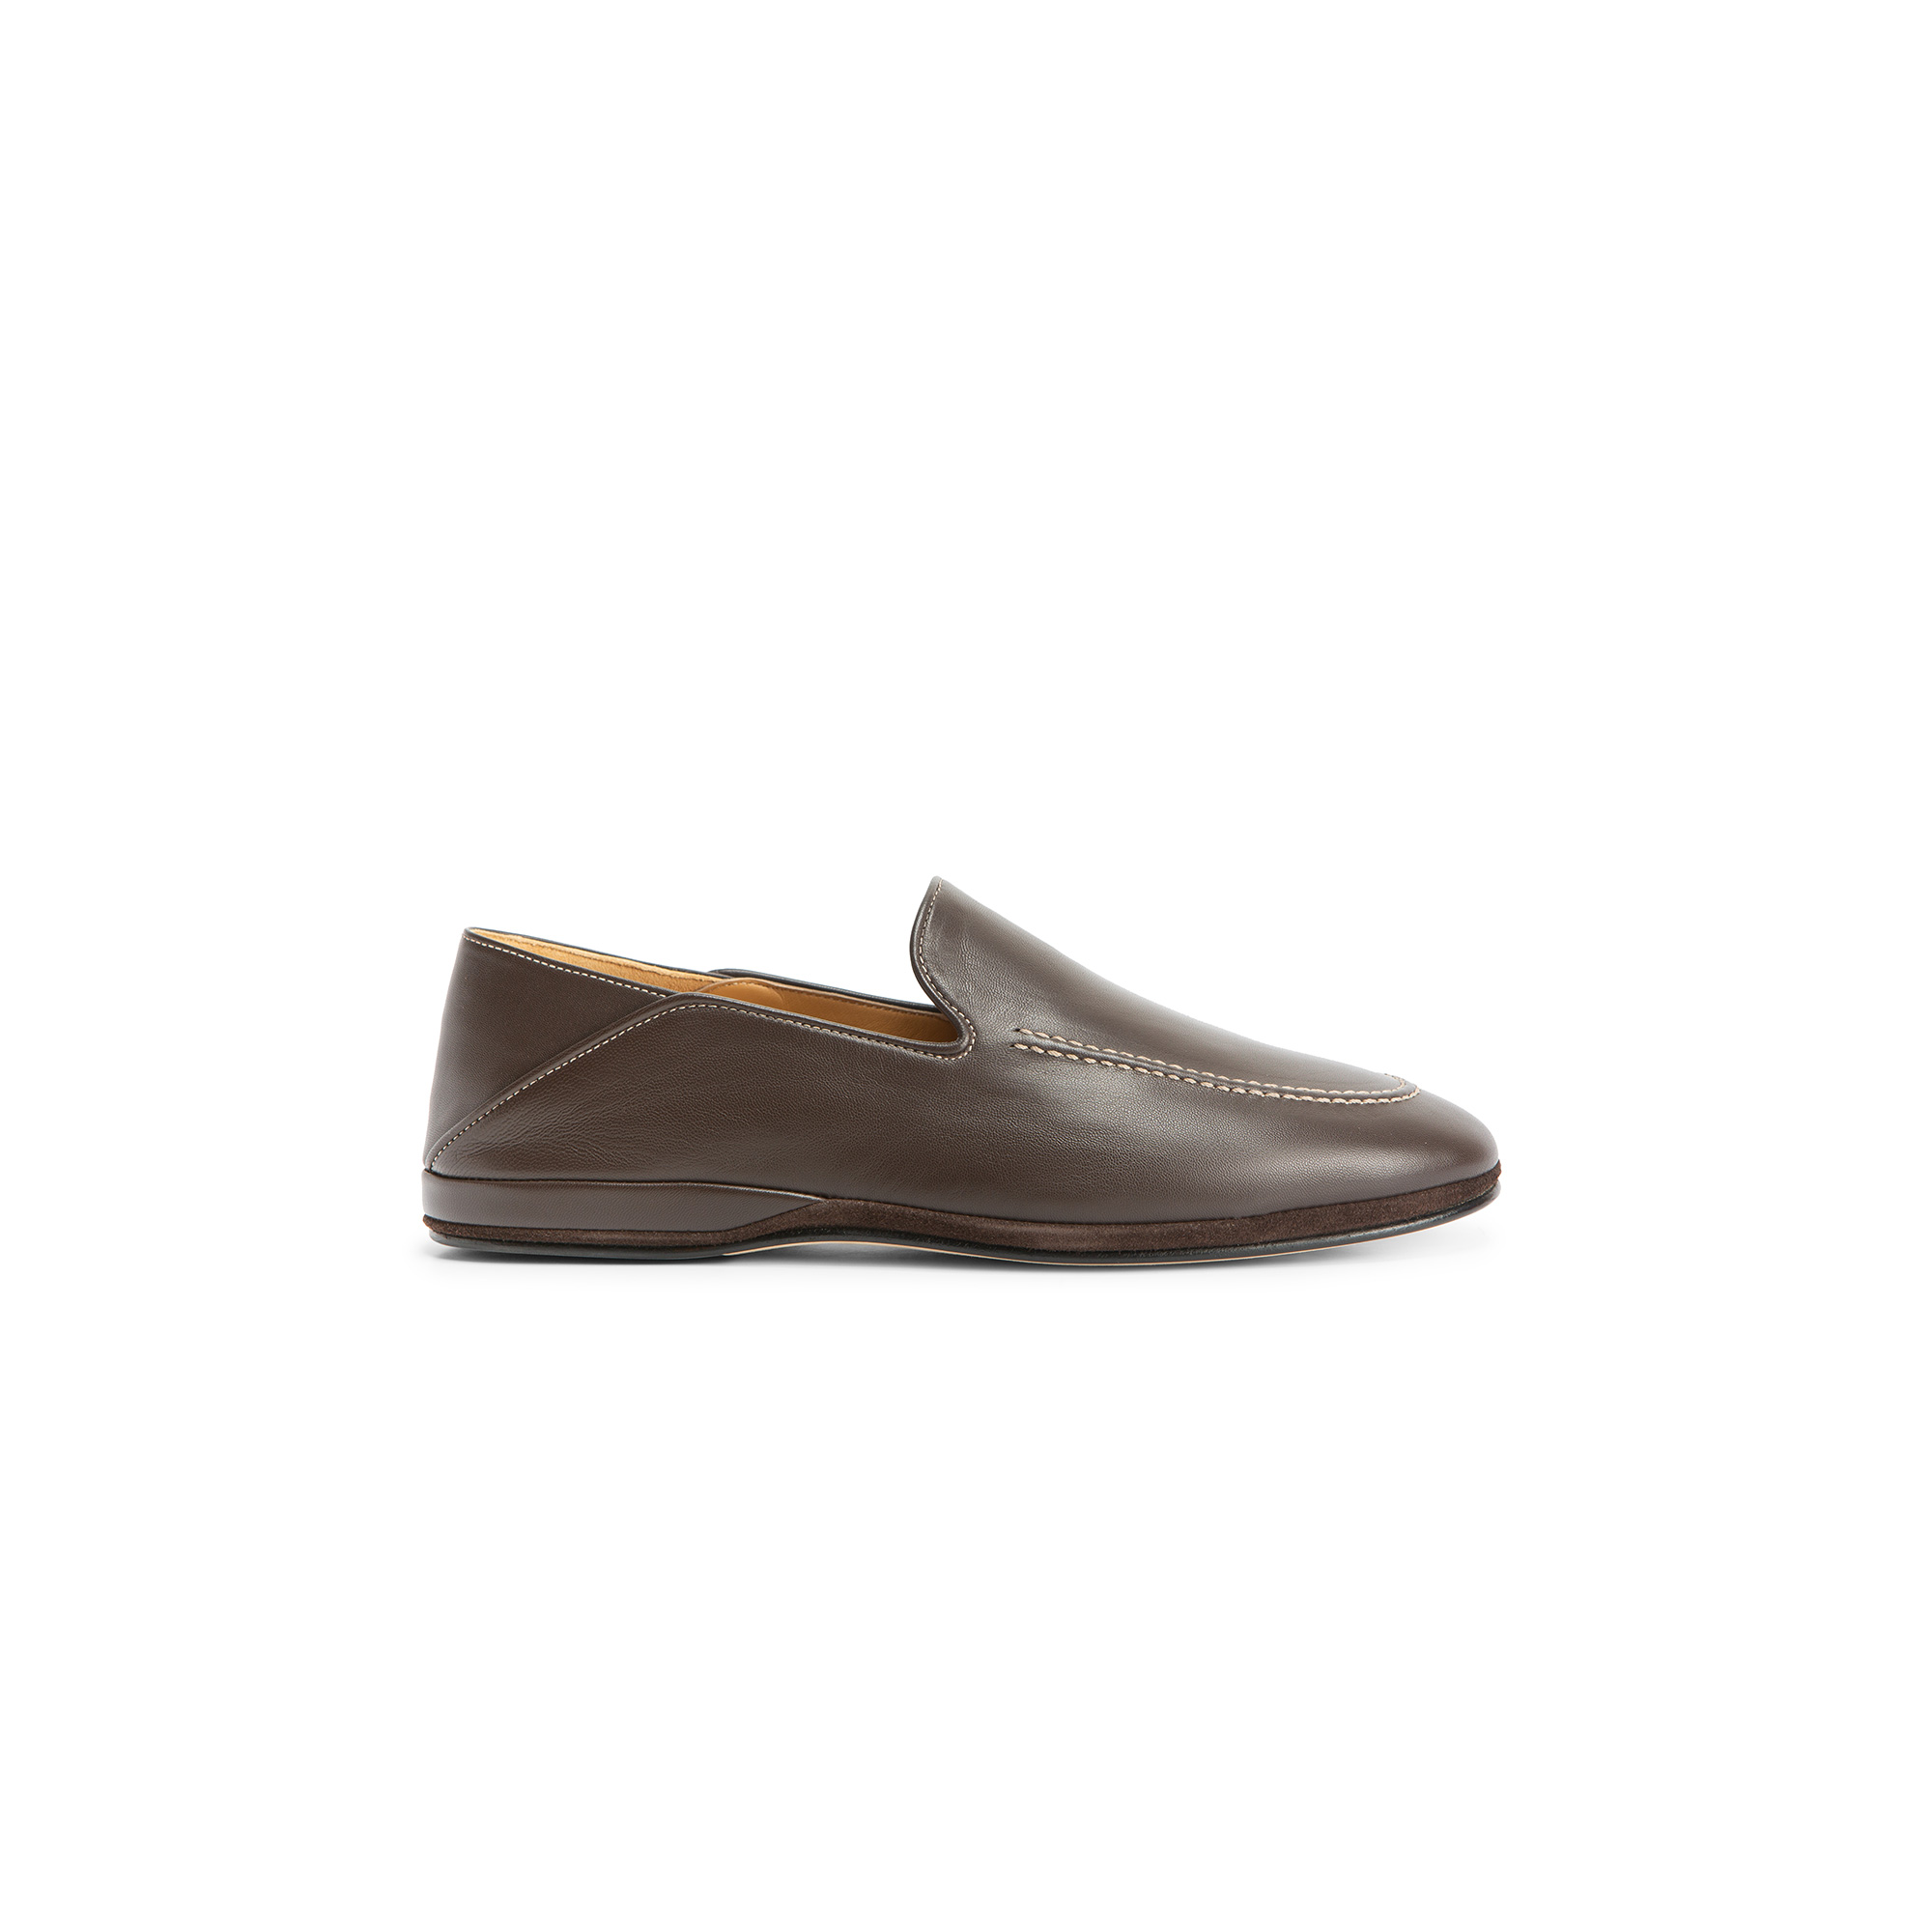 Outside closed dark brown nappa leather slipper - Farfalla italian slippers